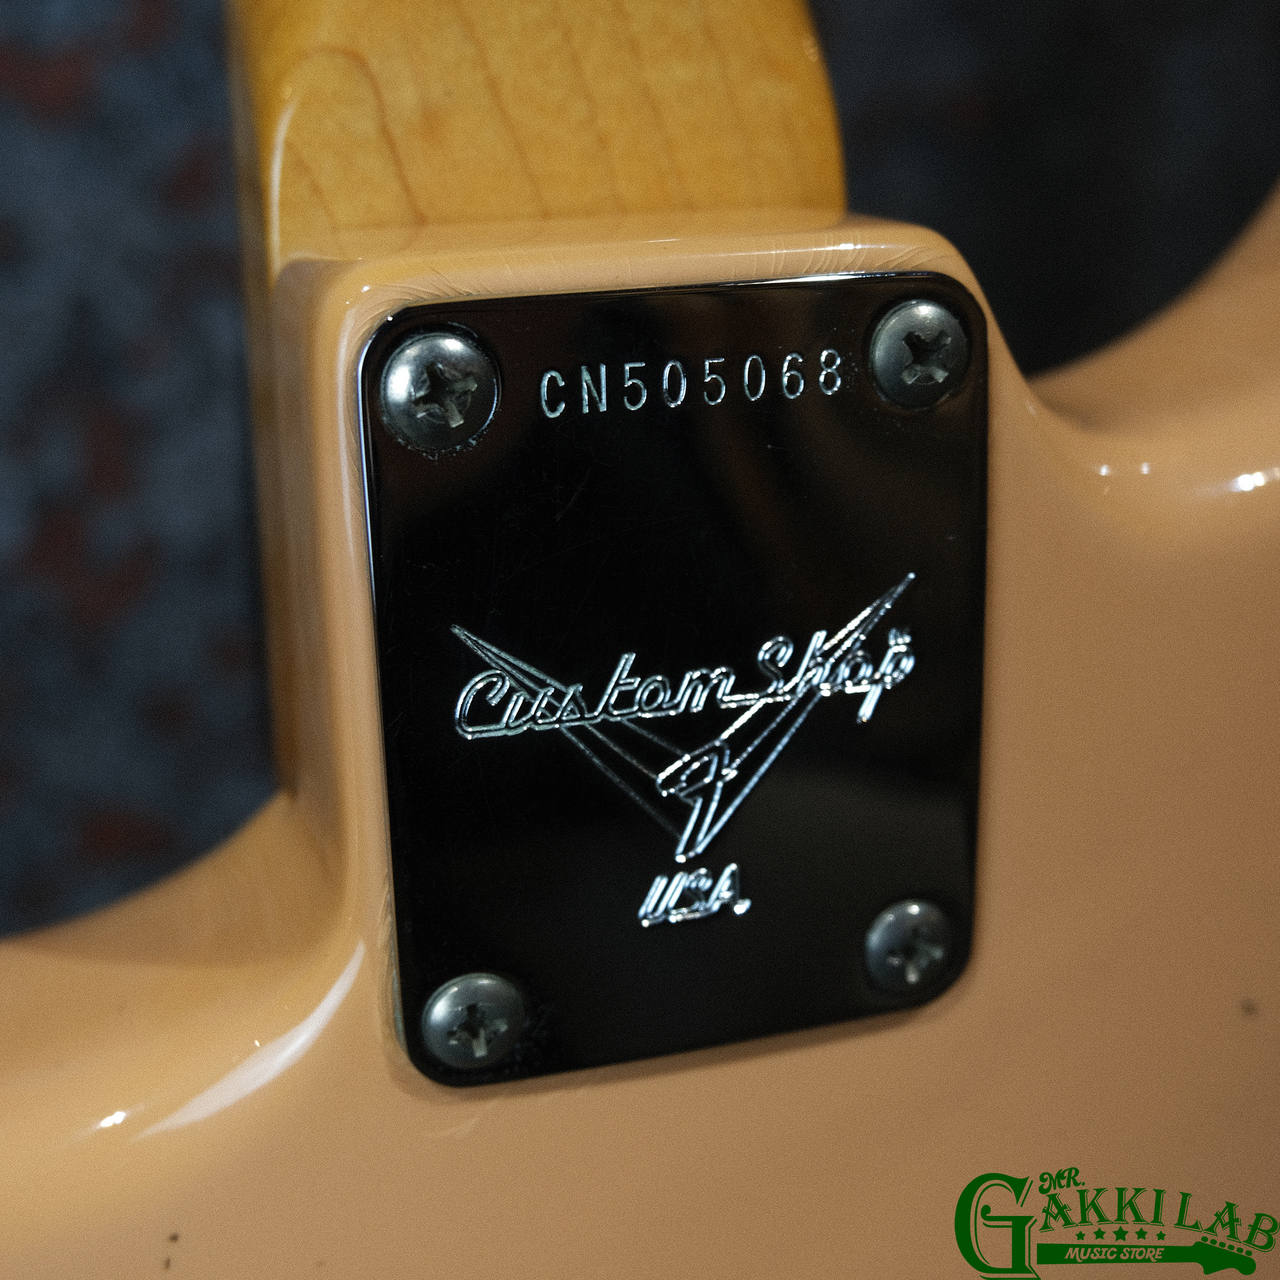 Fender Custom Shop 1960 Stratocaster Shell Pink 96's John Page 